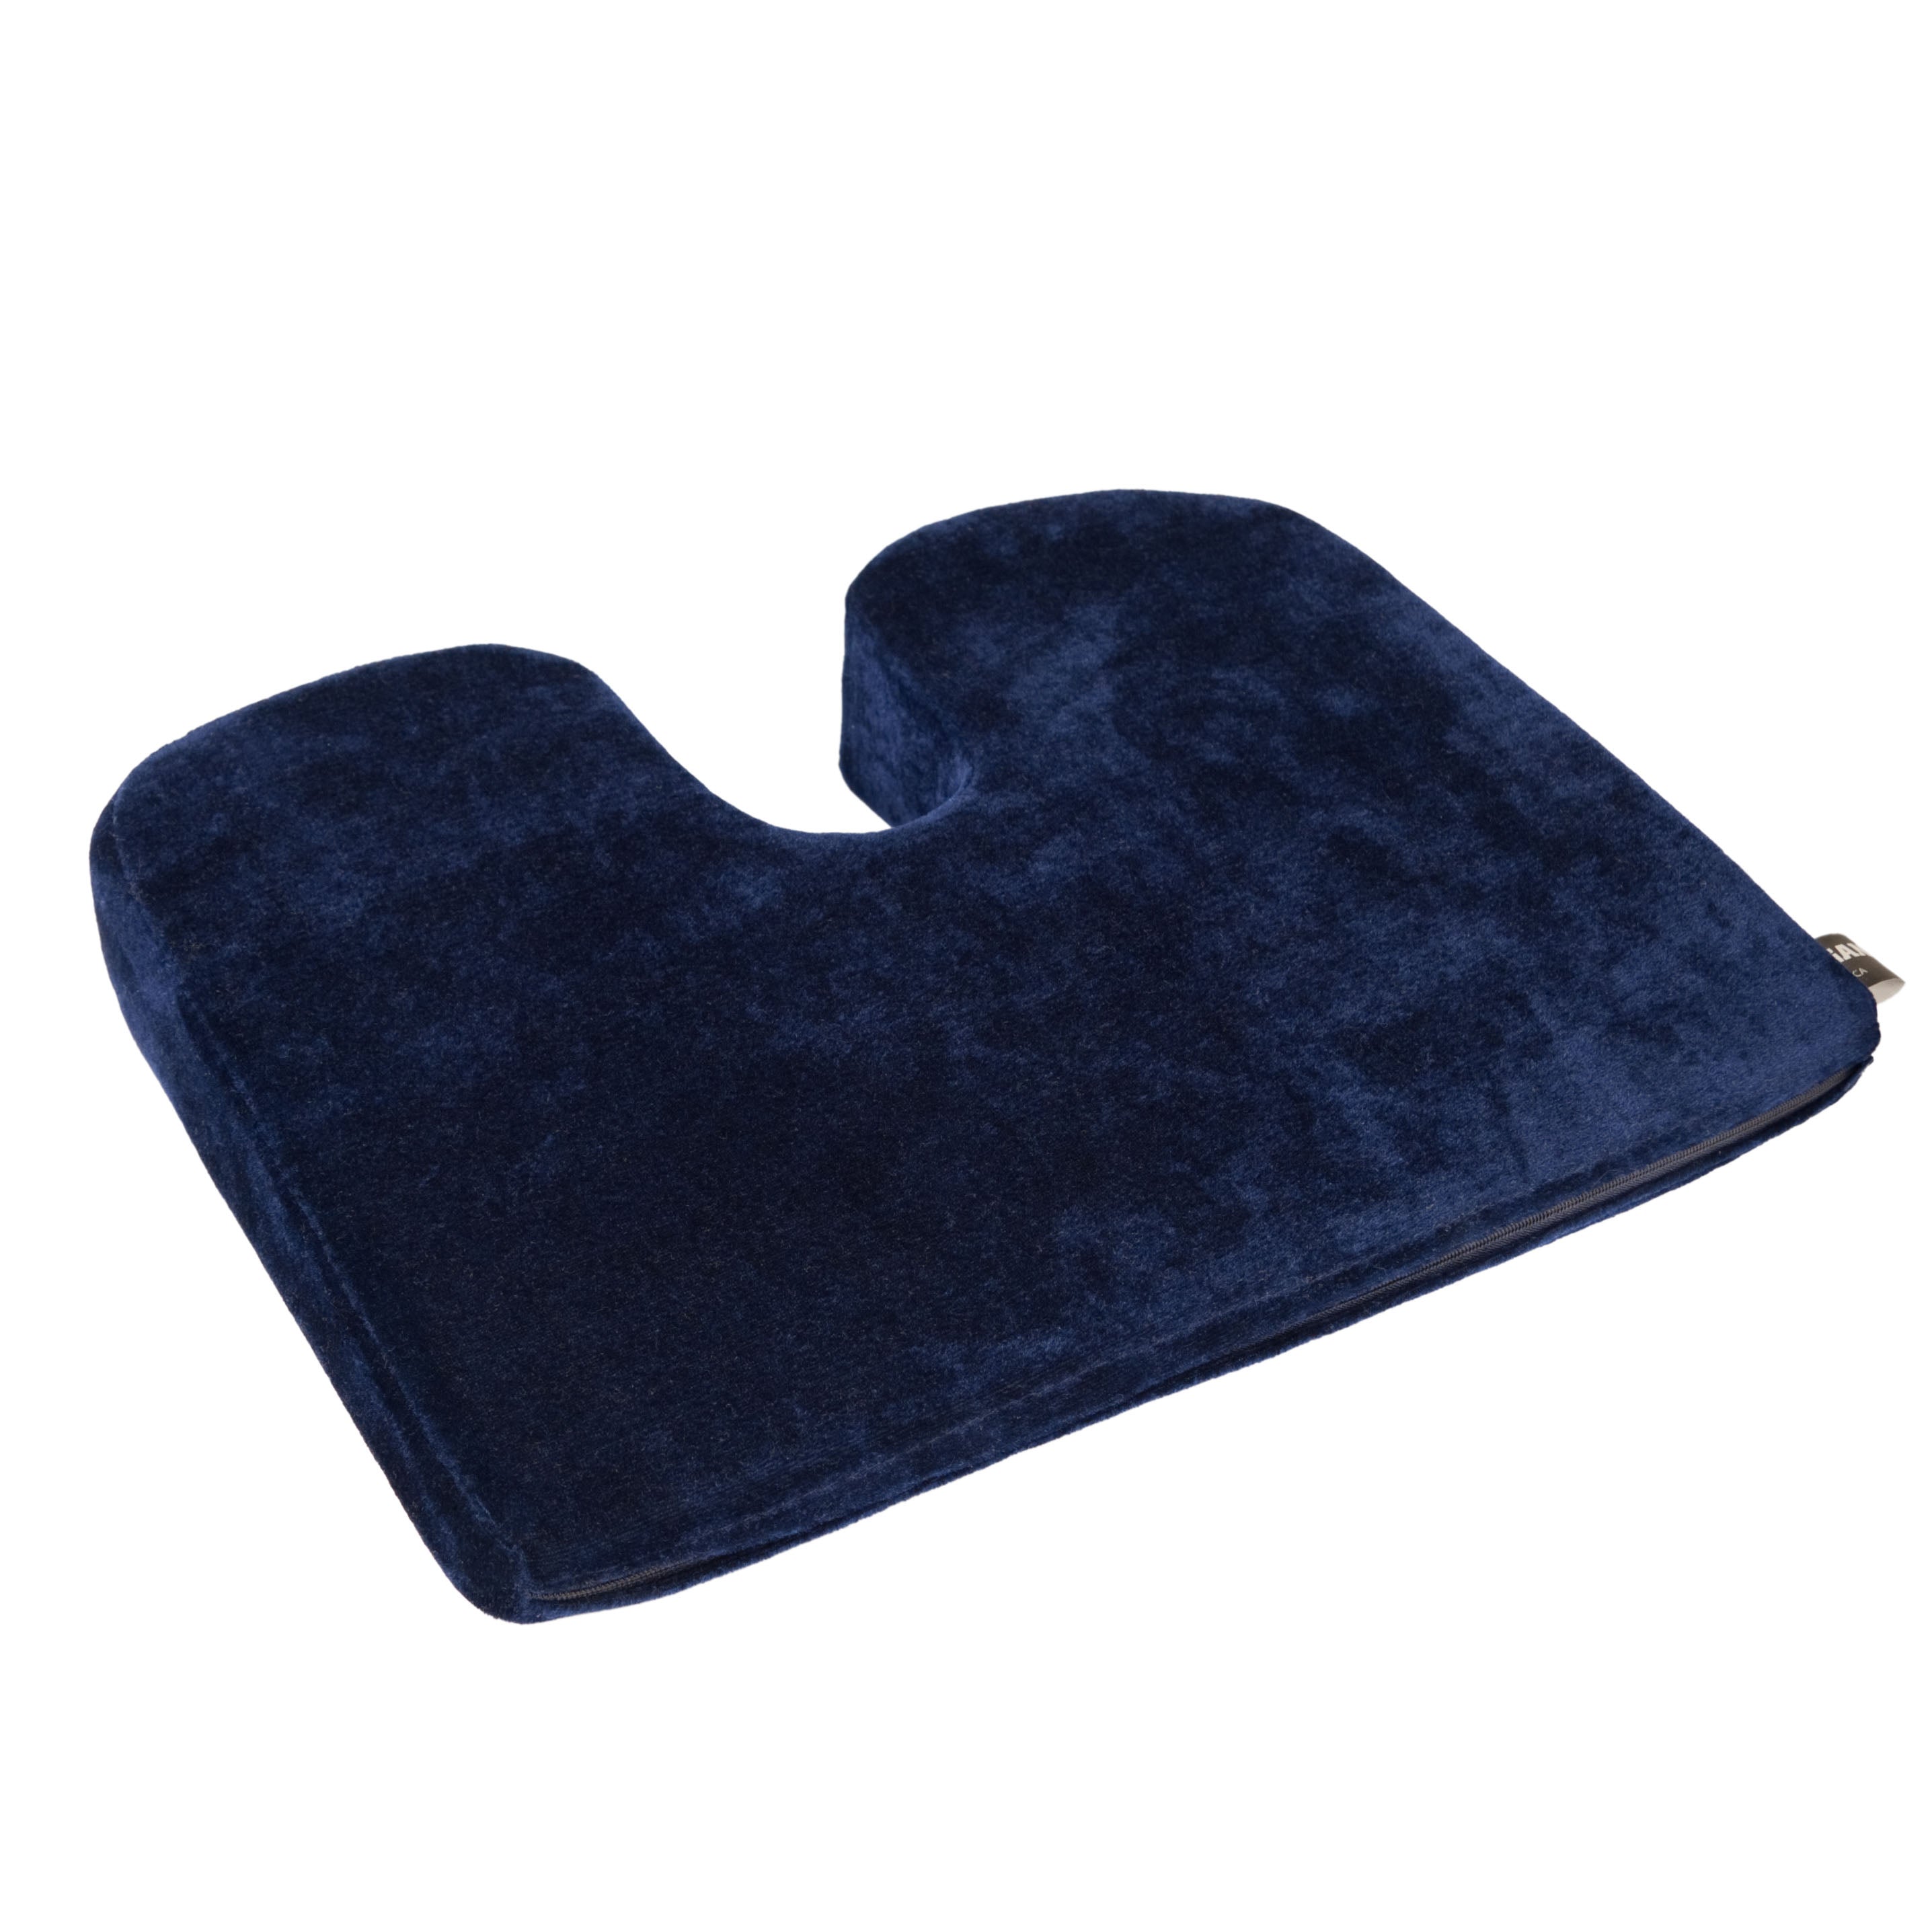 Blue Velour Cover for Orthopedic Tailbone Cushion